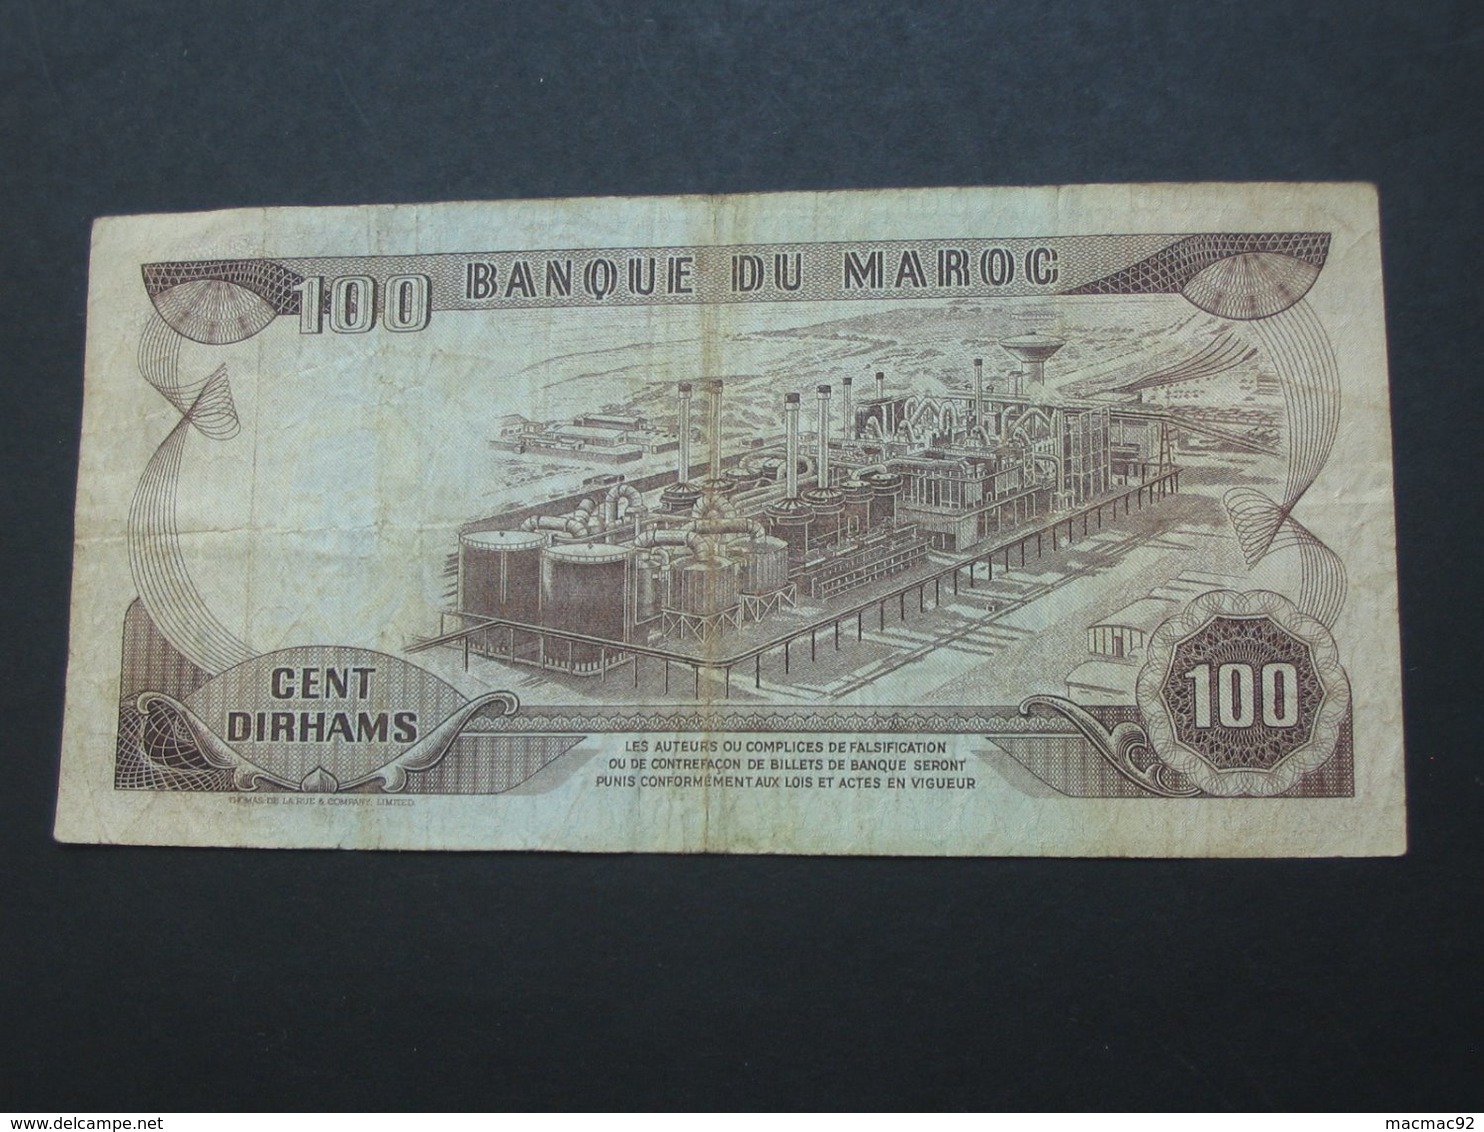 100 Dirhams 1970-1390 Maroc - Banque Du Maroc **** EN ACHAT IMMEDIAT **** - Marokko